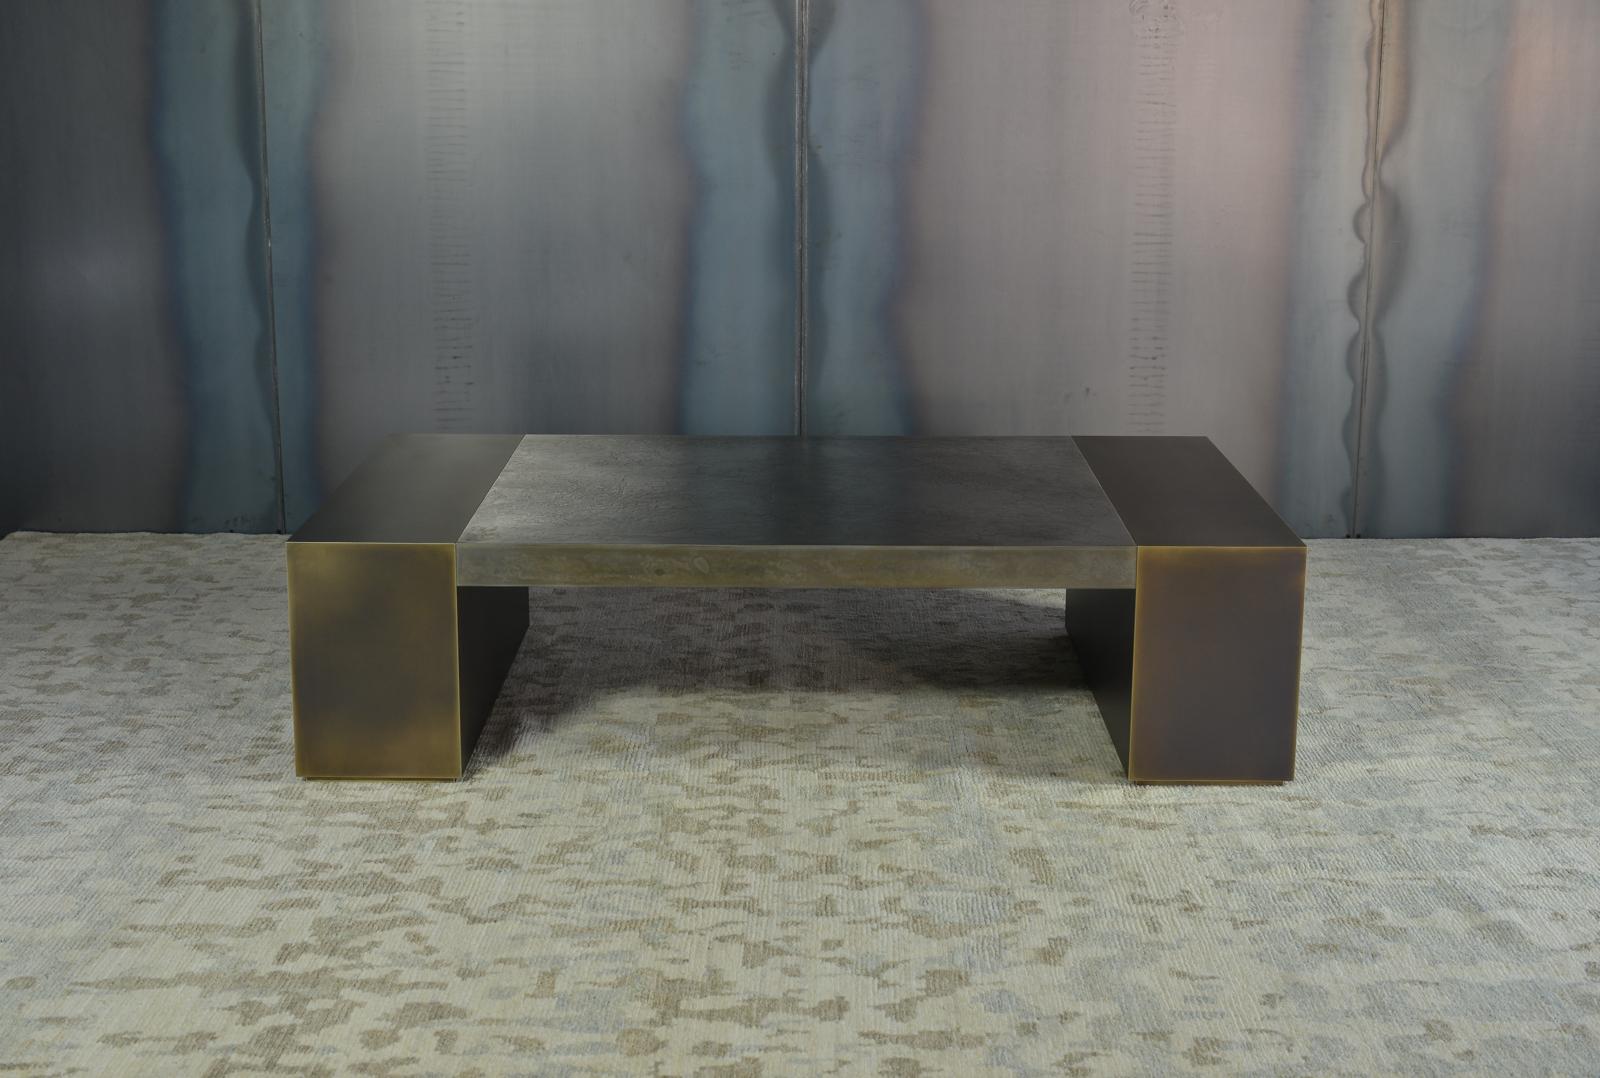 LUMA Design Workshop Block Coffee Table in Dark Resin and Textured Bronze Metal For Sale 1